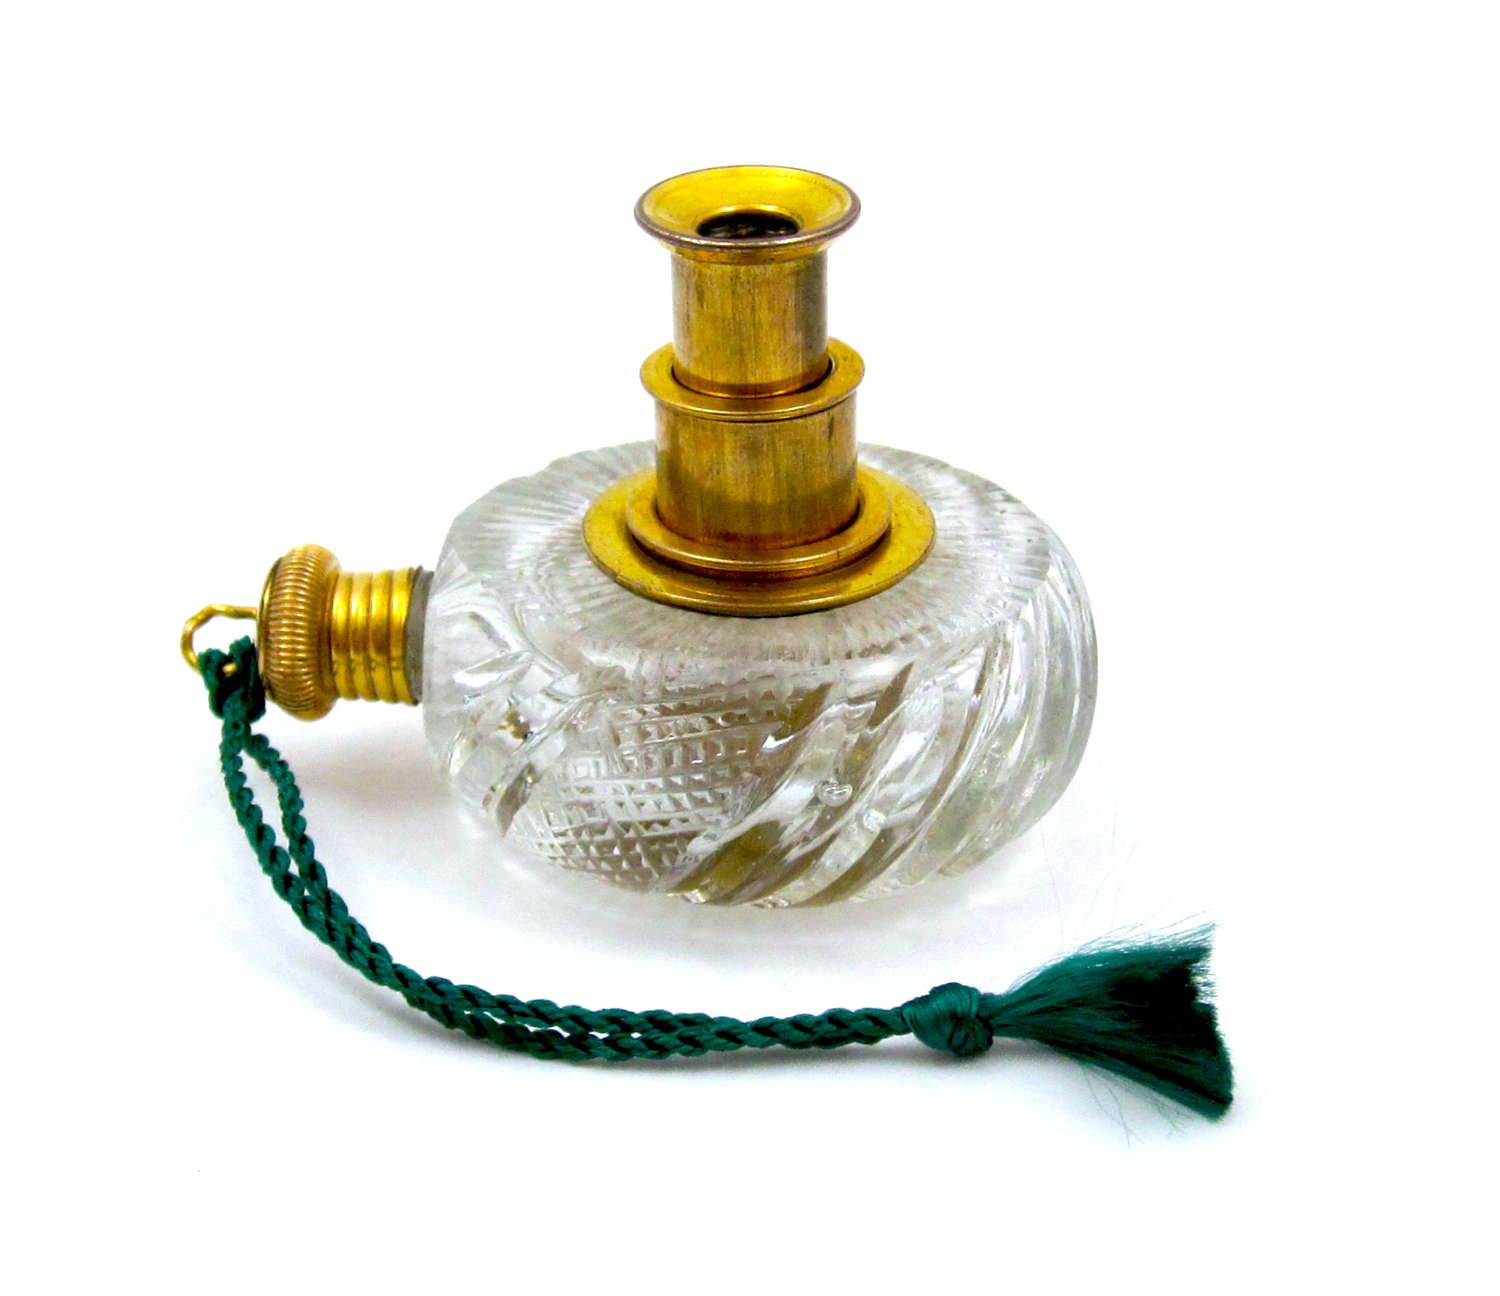 A Rare Antique Baccarat Monocular Cut Crystal Perfume Bottle